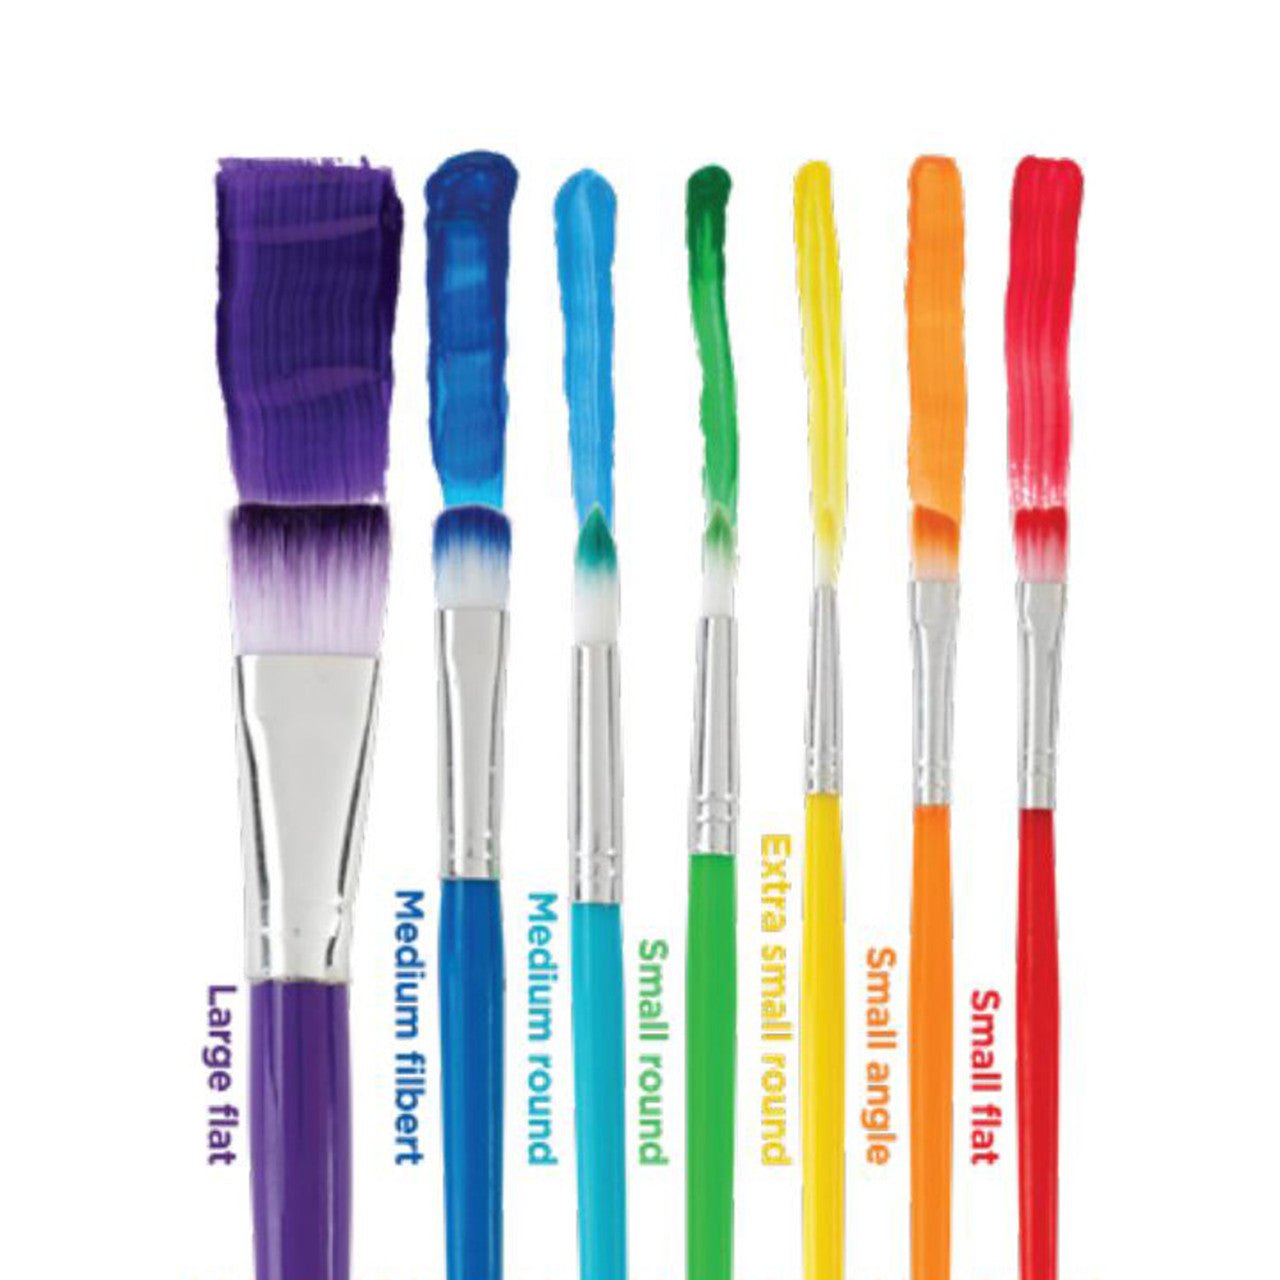 Rainbow Brush Set- set of 7